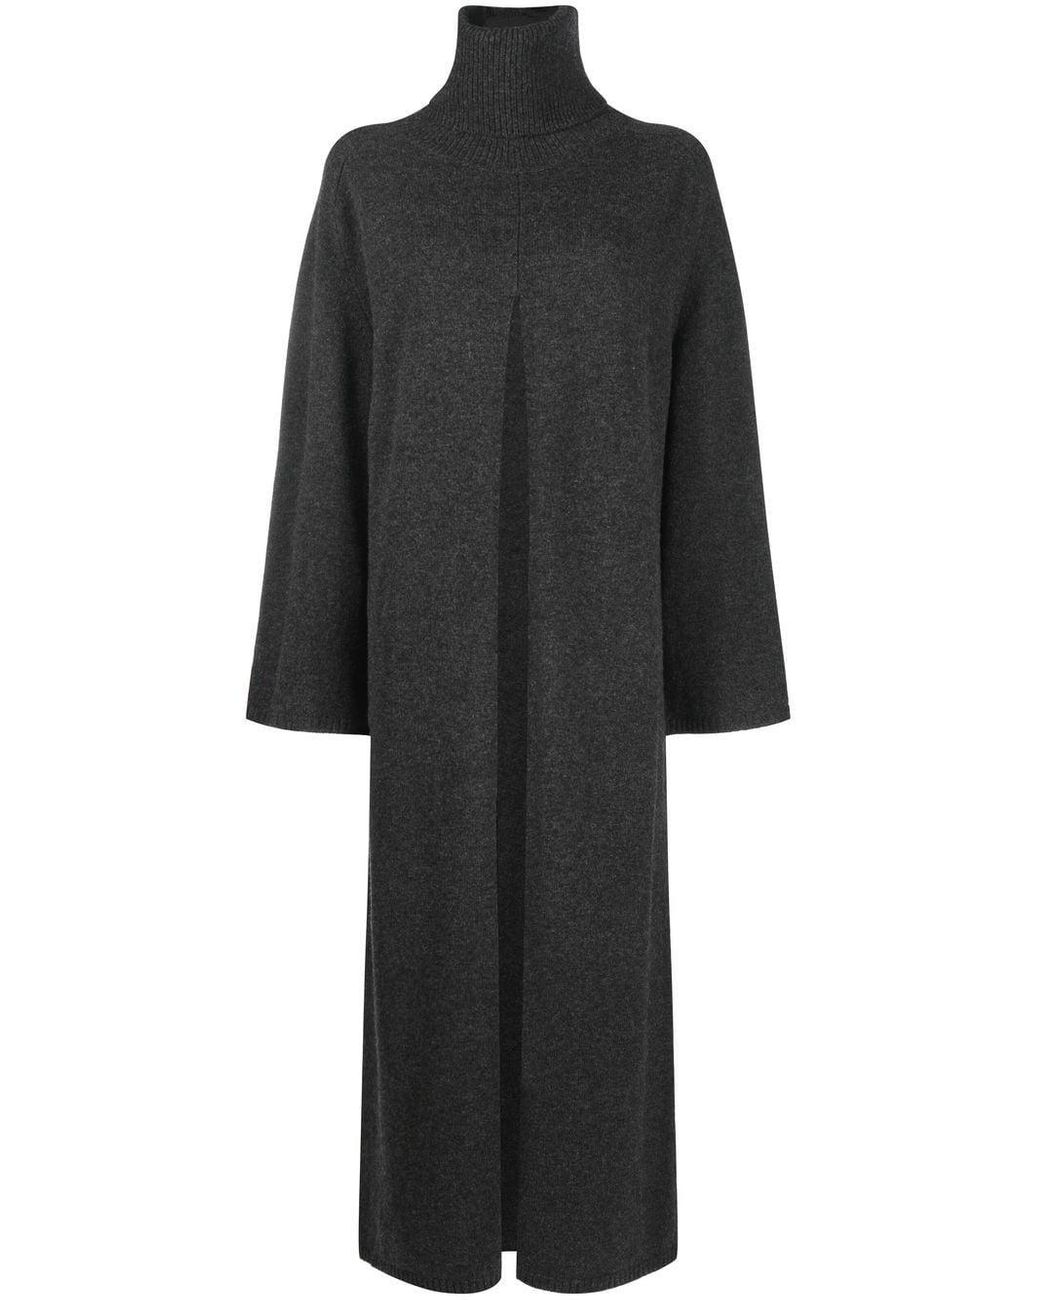 JOSEPH Viviane Rollneck Merino Wool Dress in Black | Lyst